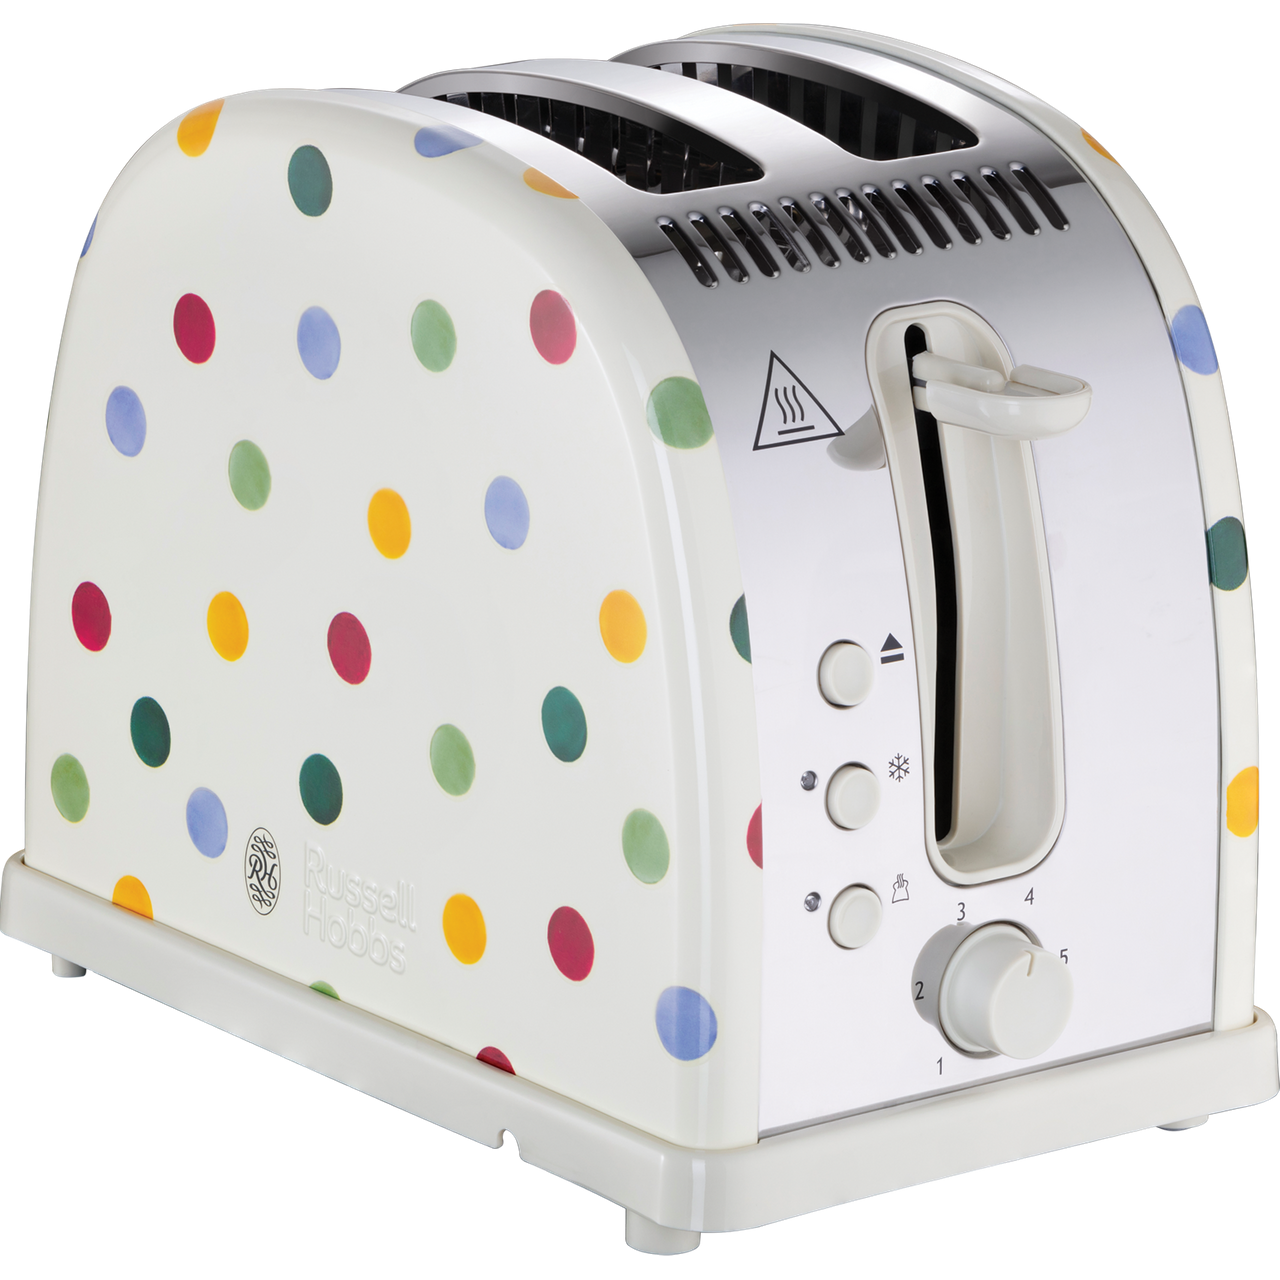 Russell Hobbs Emma Bridgewater Polka Dot Design 21295 2 Slice Toaster Review